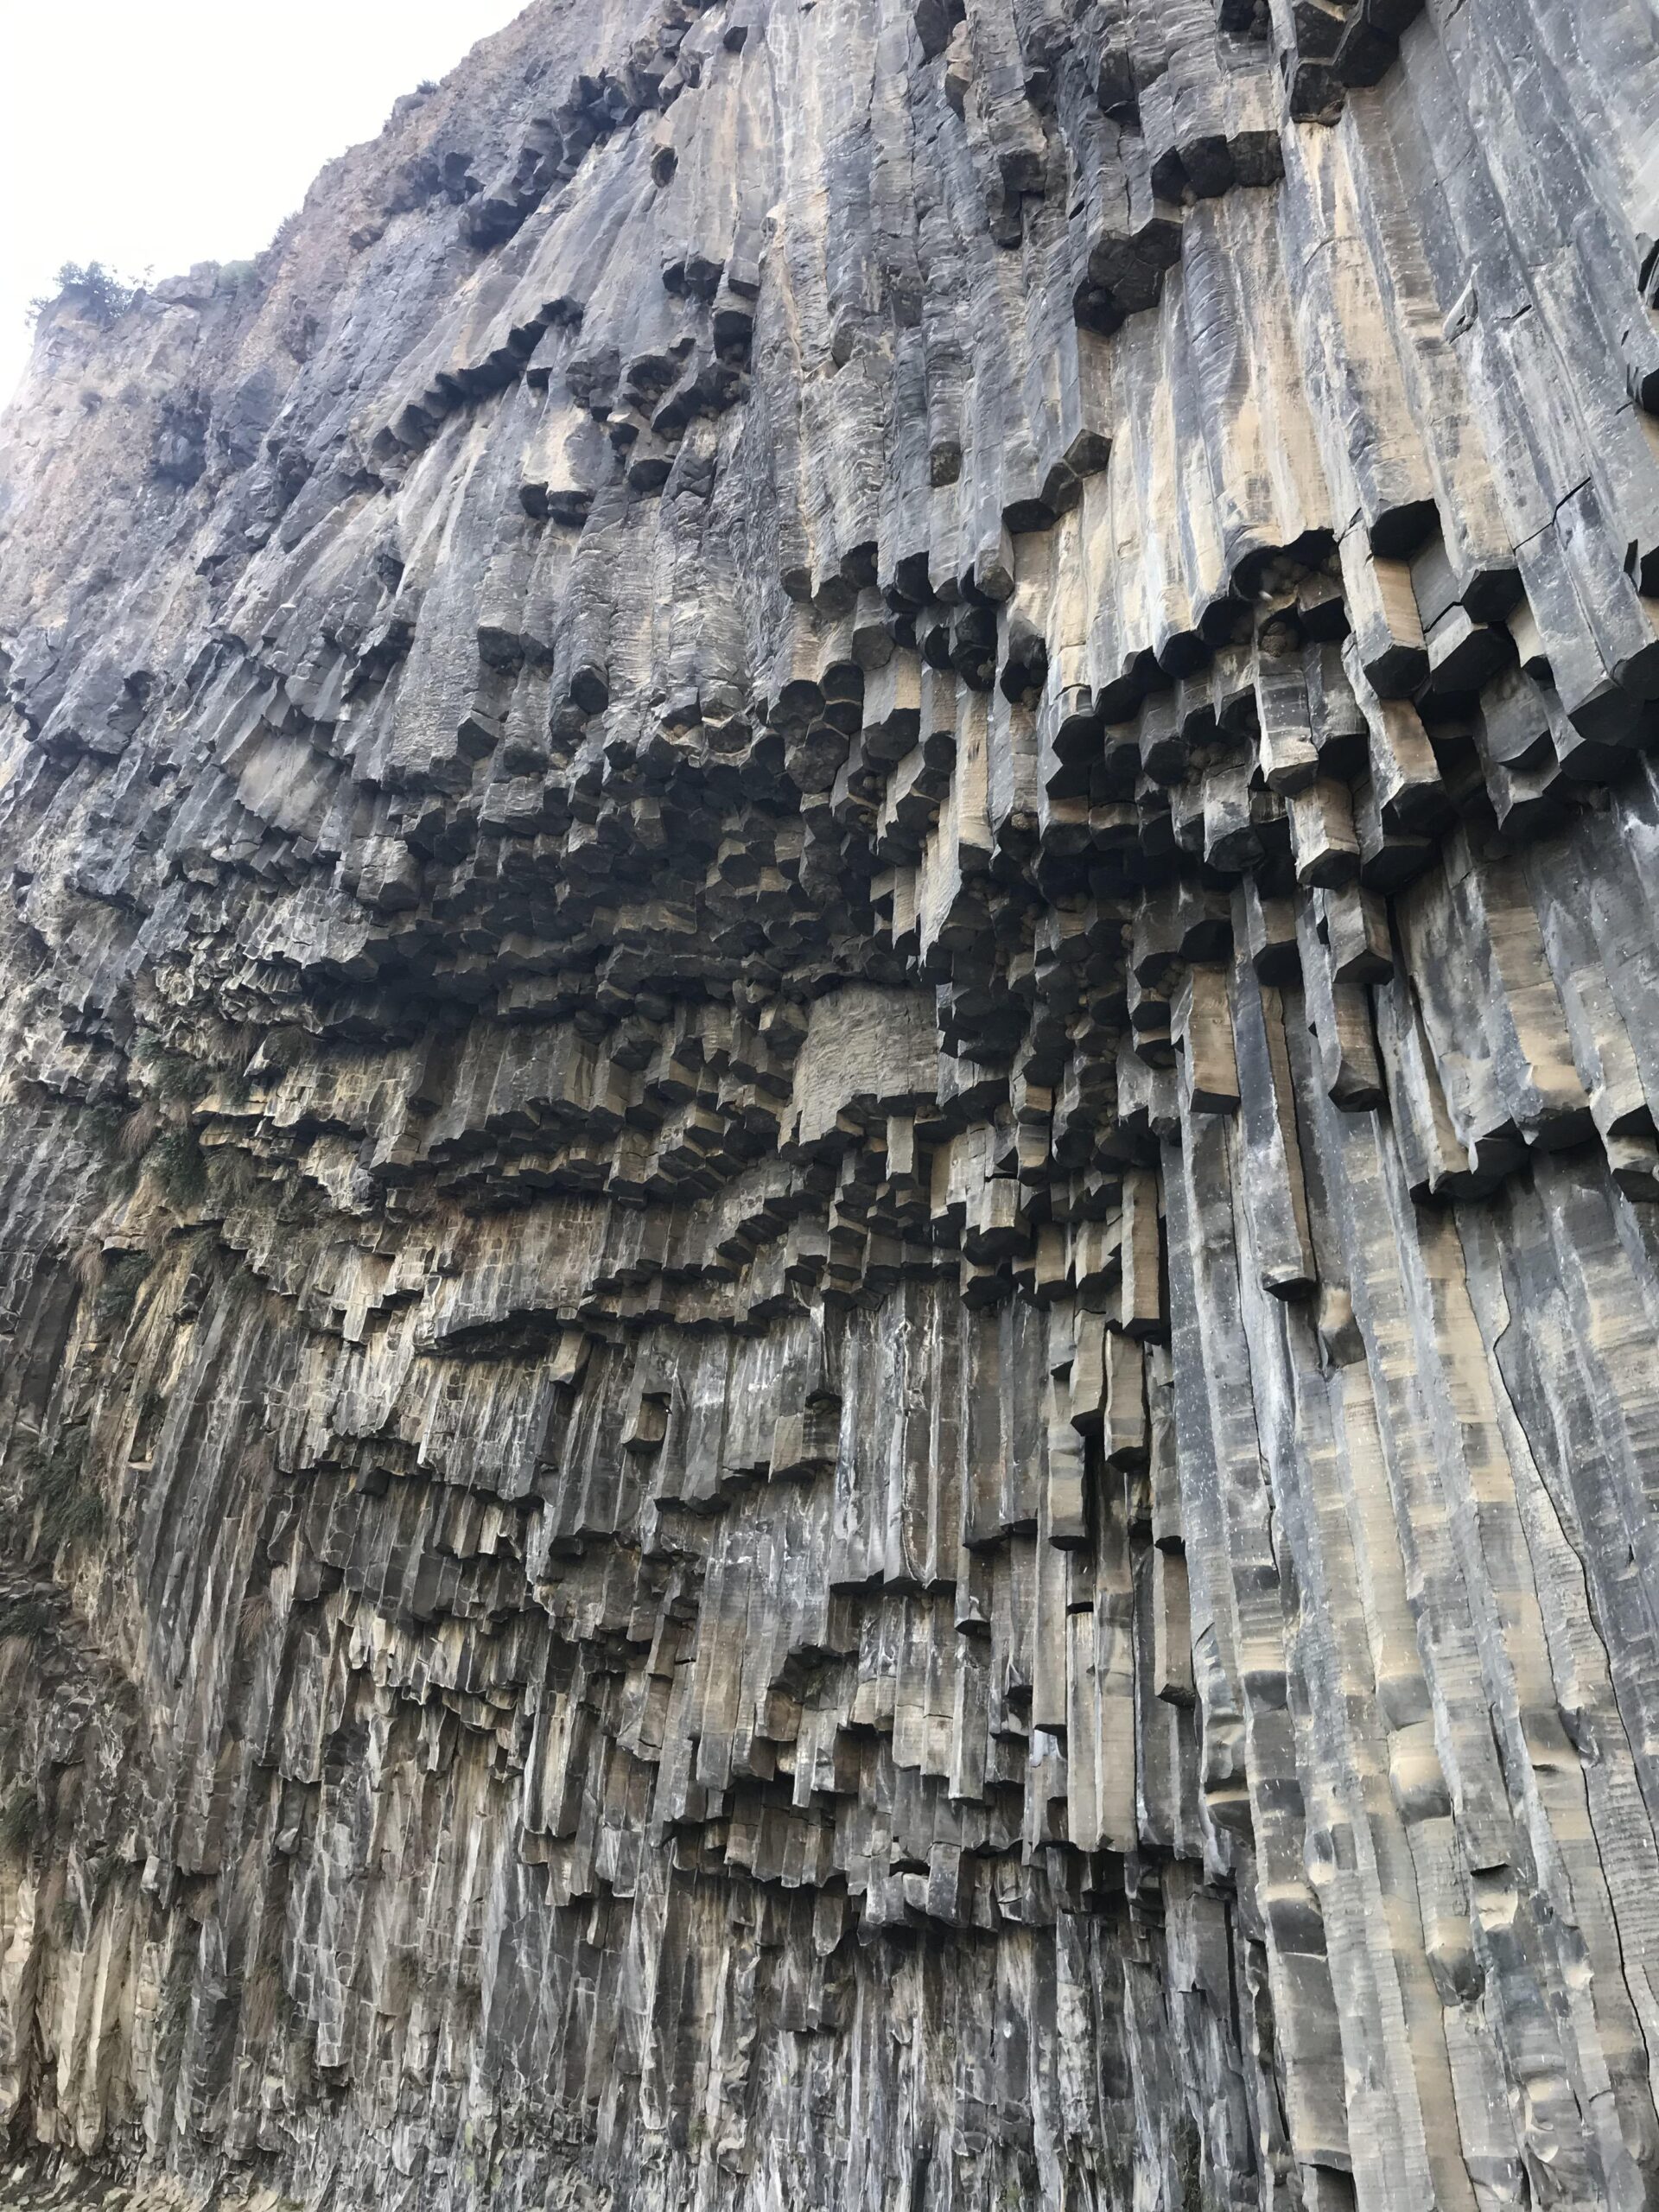 The Garni Gorge - Symphony of Stones